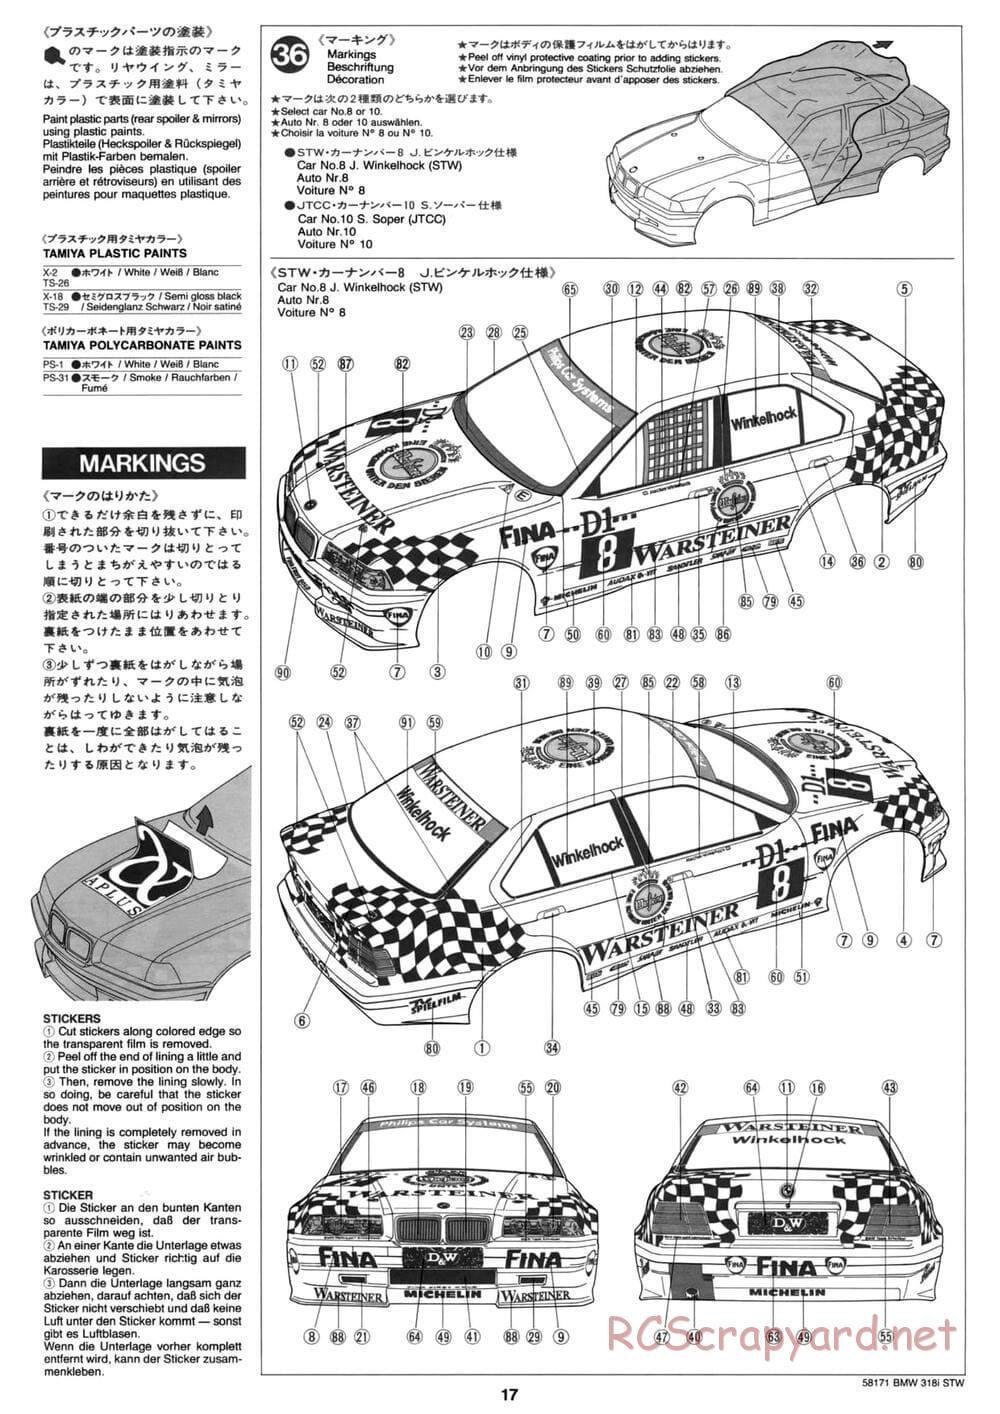 Tamiya - BMW 318i STW - TA-02 Chassis - Manual - Page 17